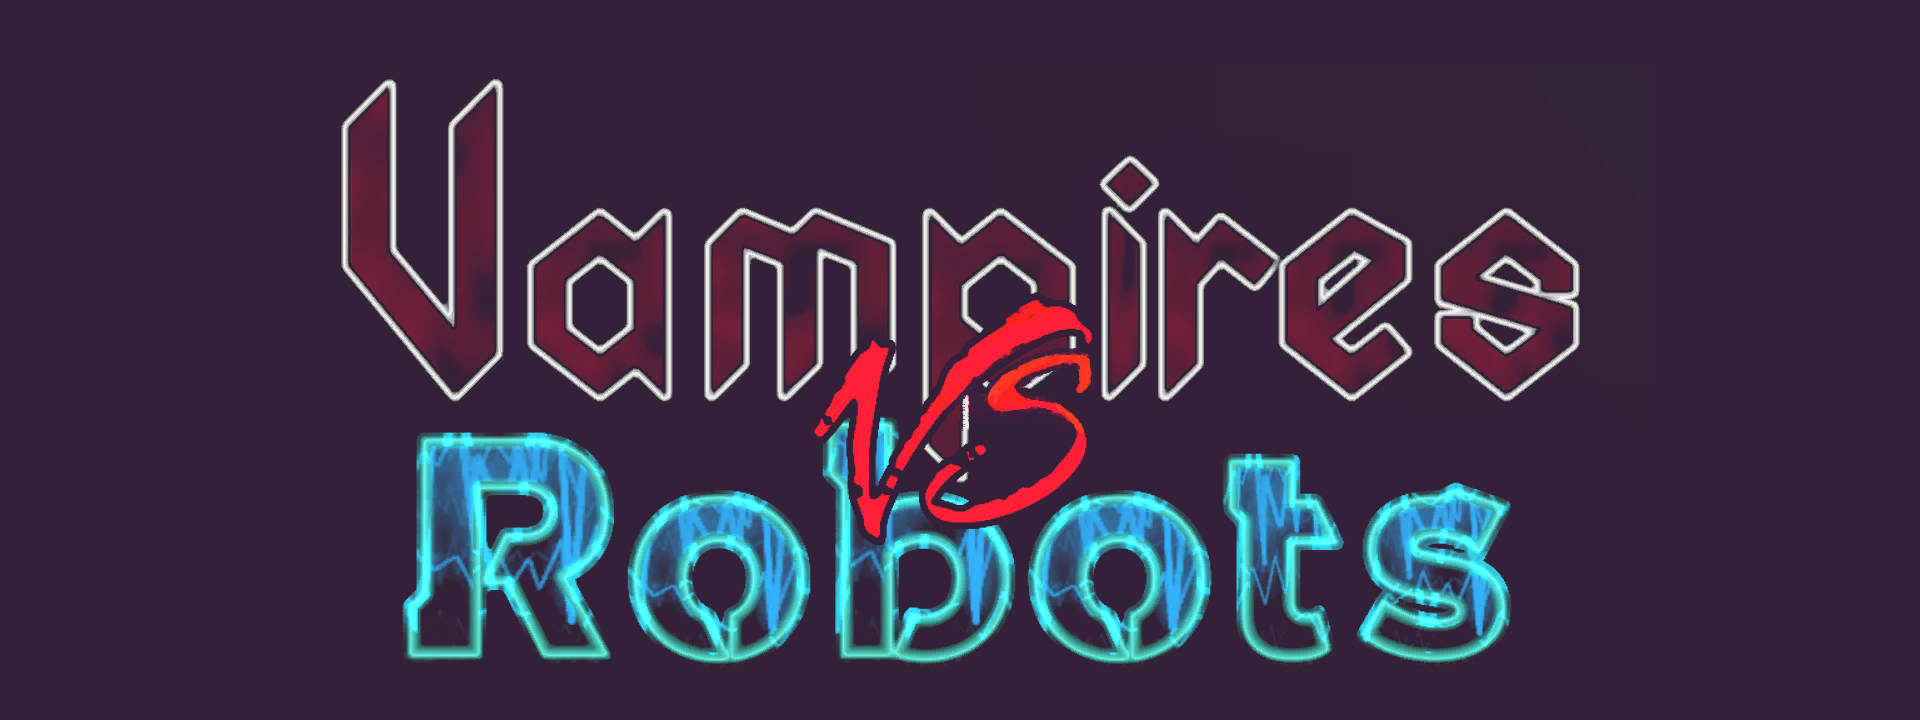 Cyberblood: Vampires Vs Robots